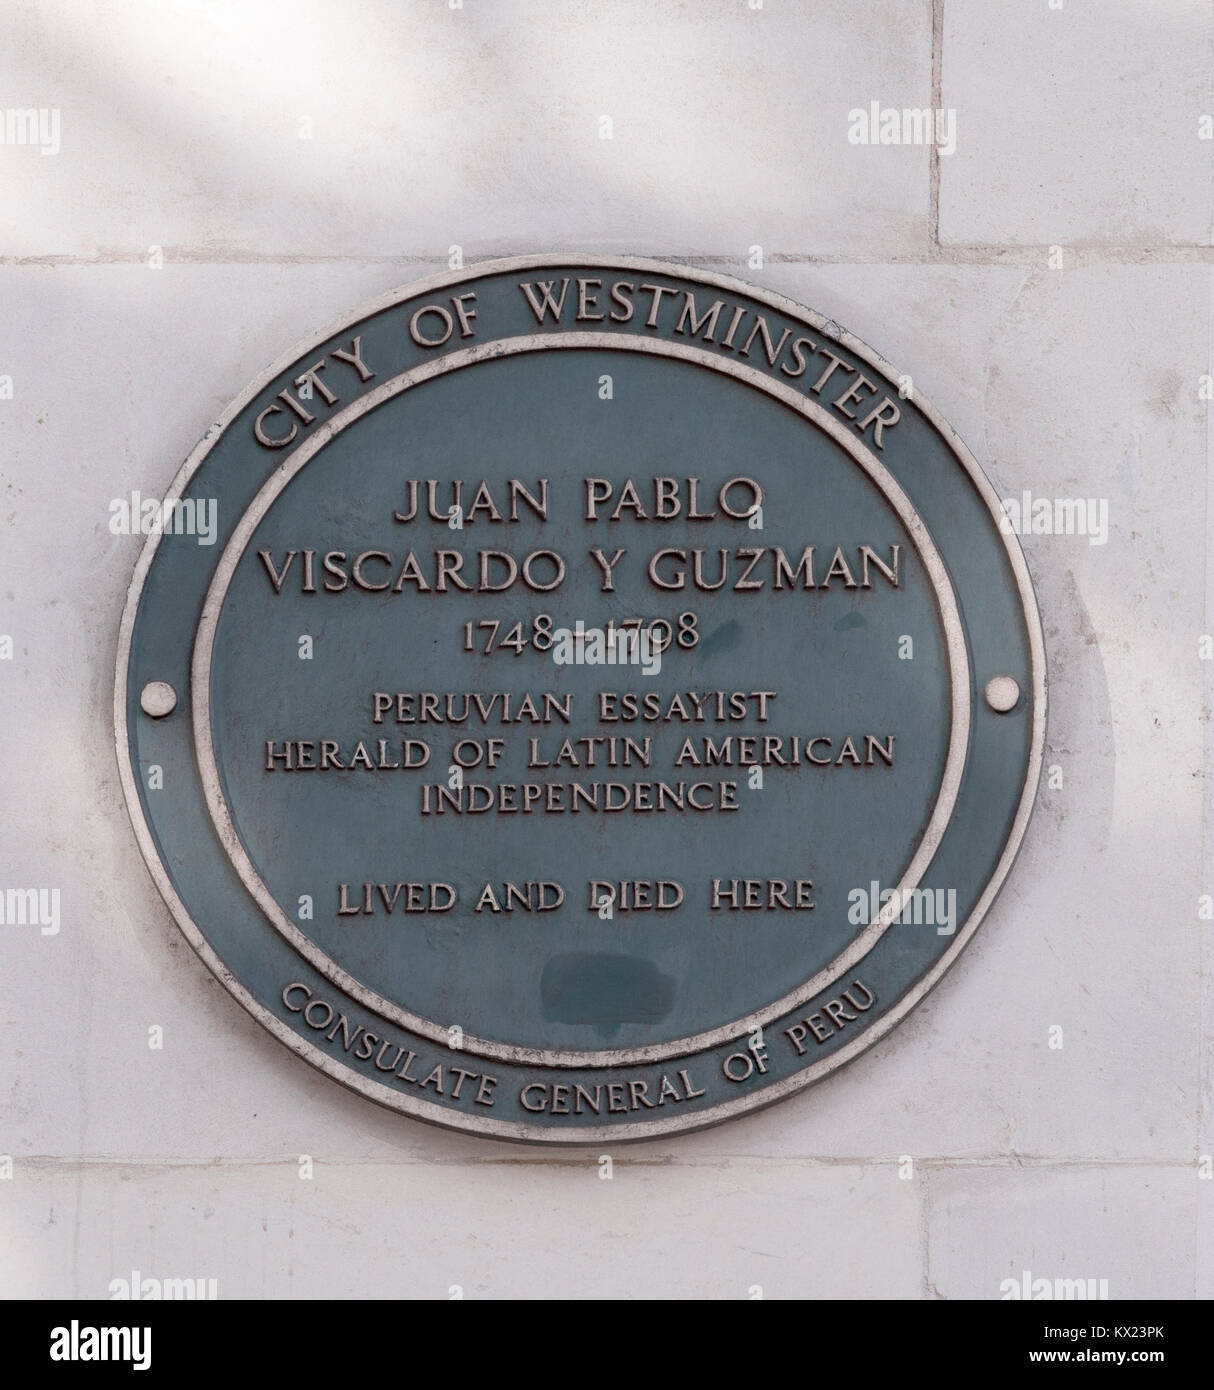 City of Westminster heritage plaque for Juan Pablo Viscardo Y Ouzman Stock Photo